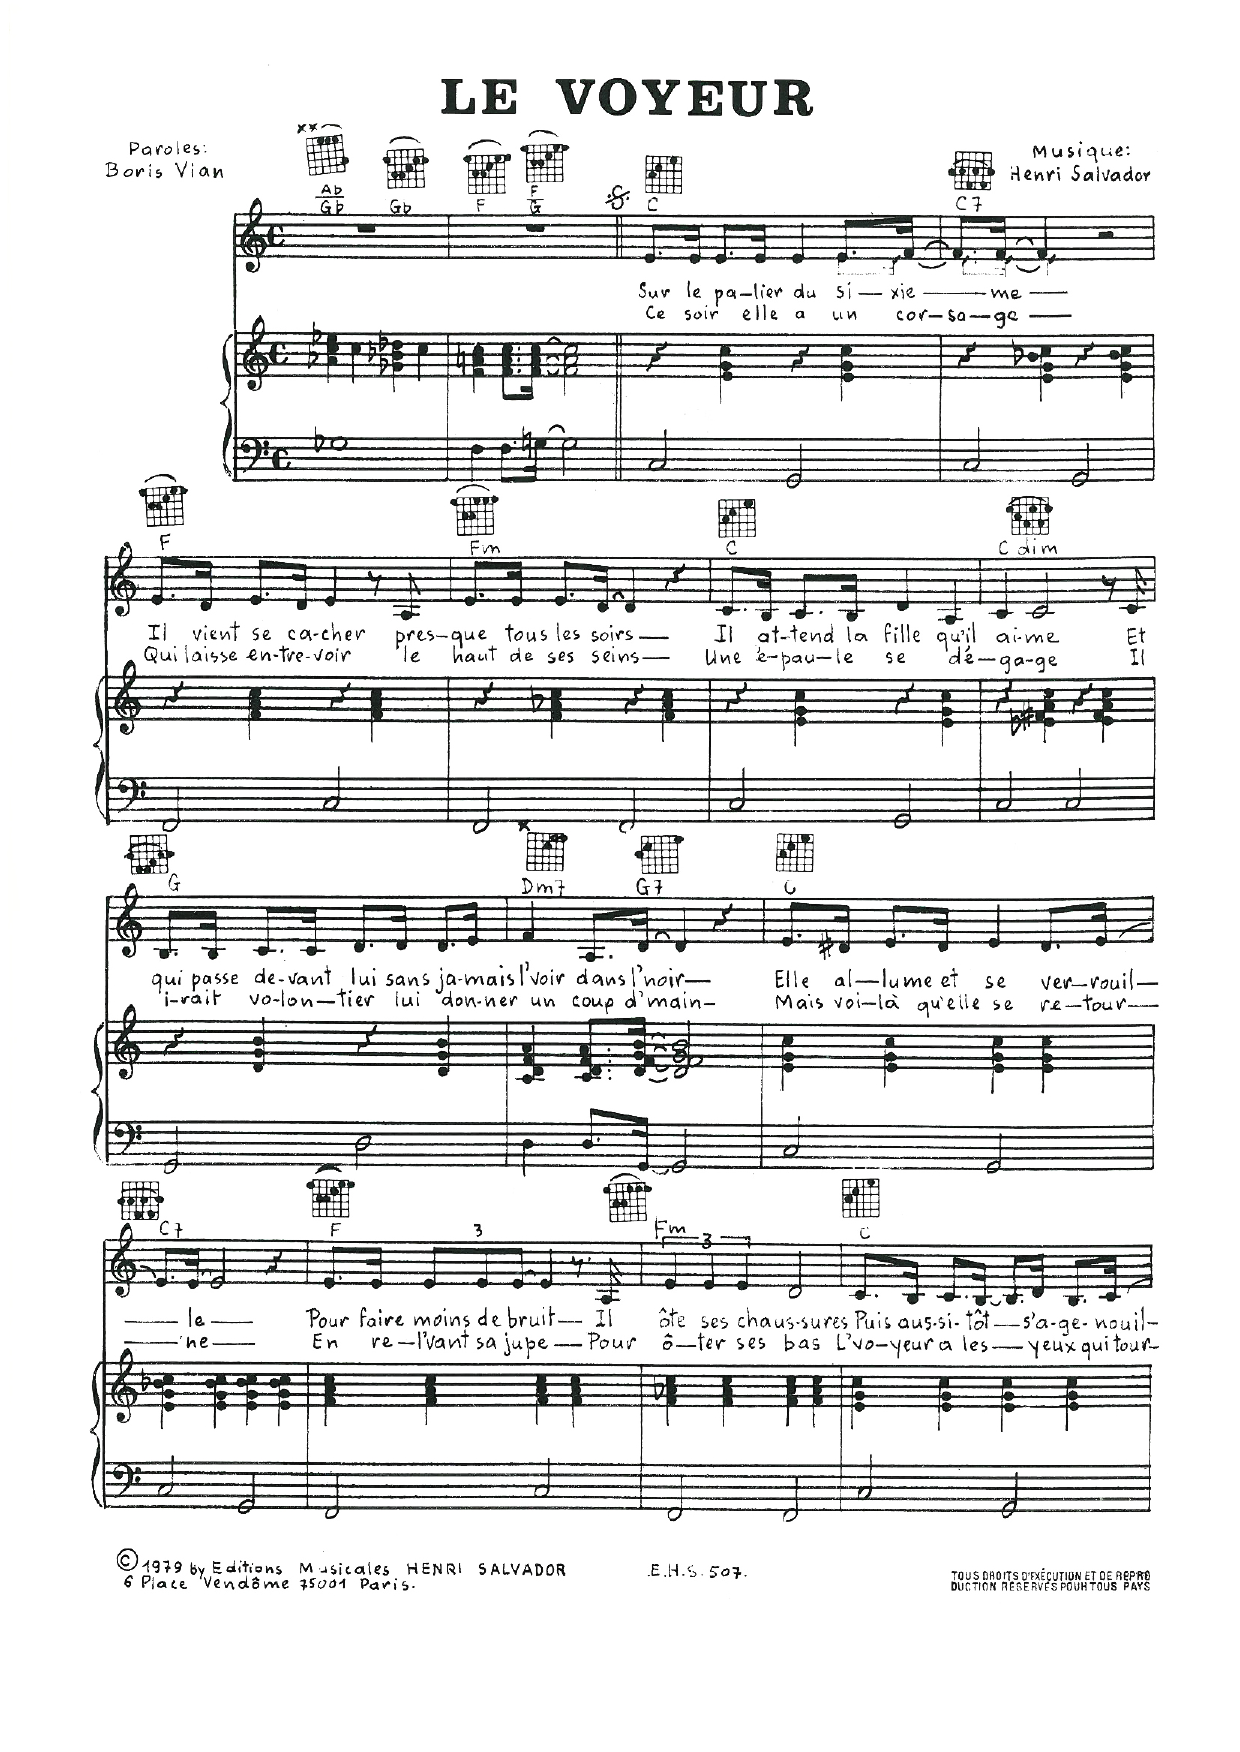 Henri Salvador Le Voyeur Sheet Music Notes & Chords for Piano, Vocal & Guitar - Download or Print PDF